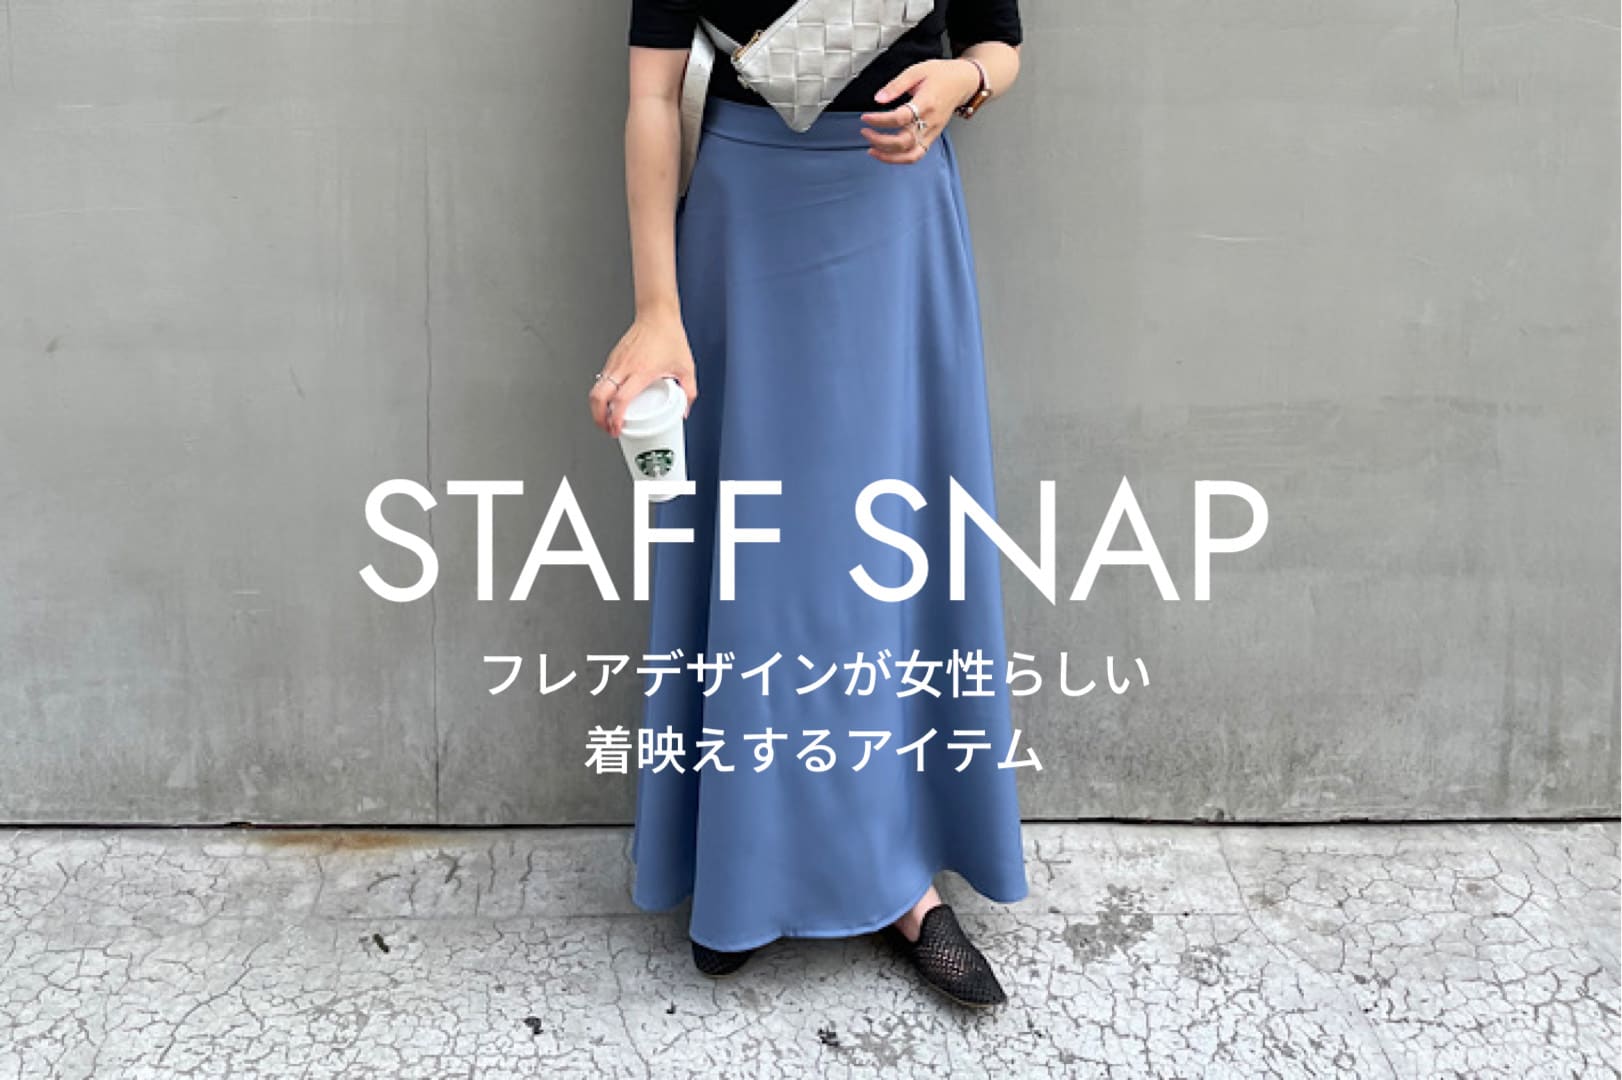 Pal collection 【STAFF SNAP】着映えする大人なフレアスカート！